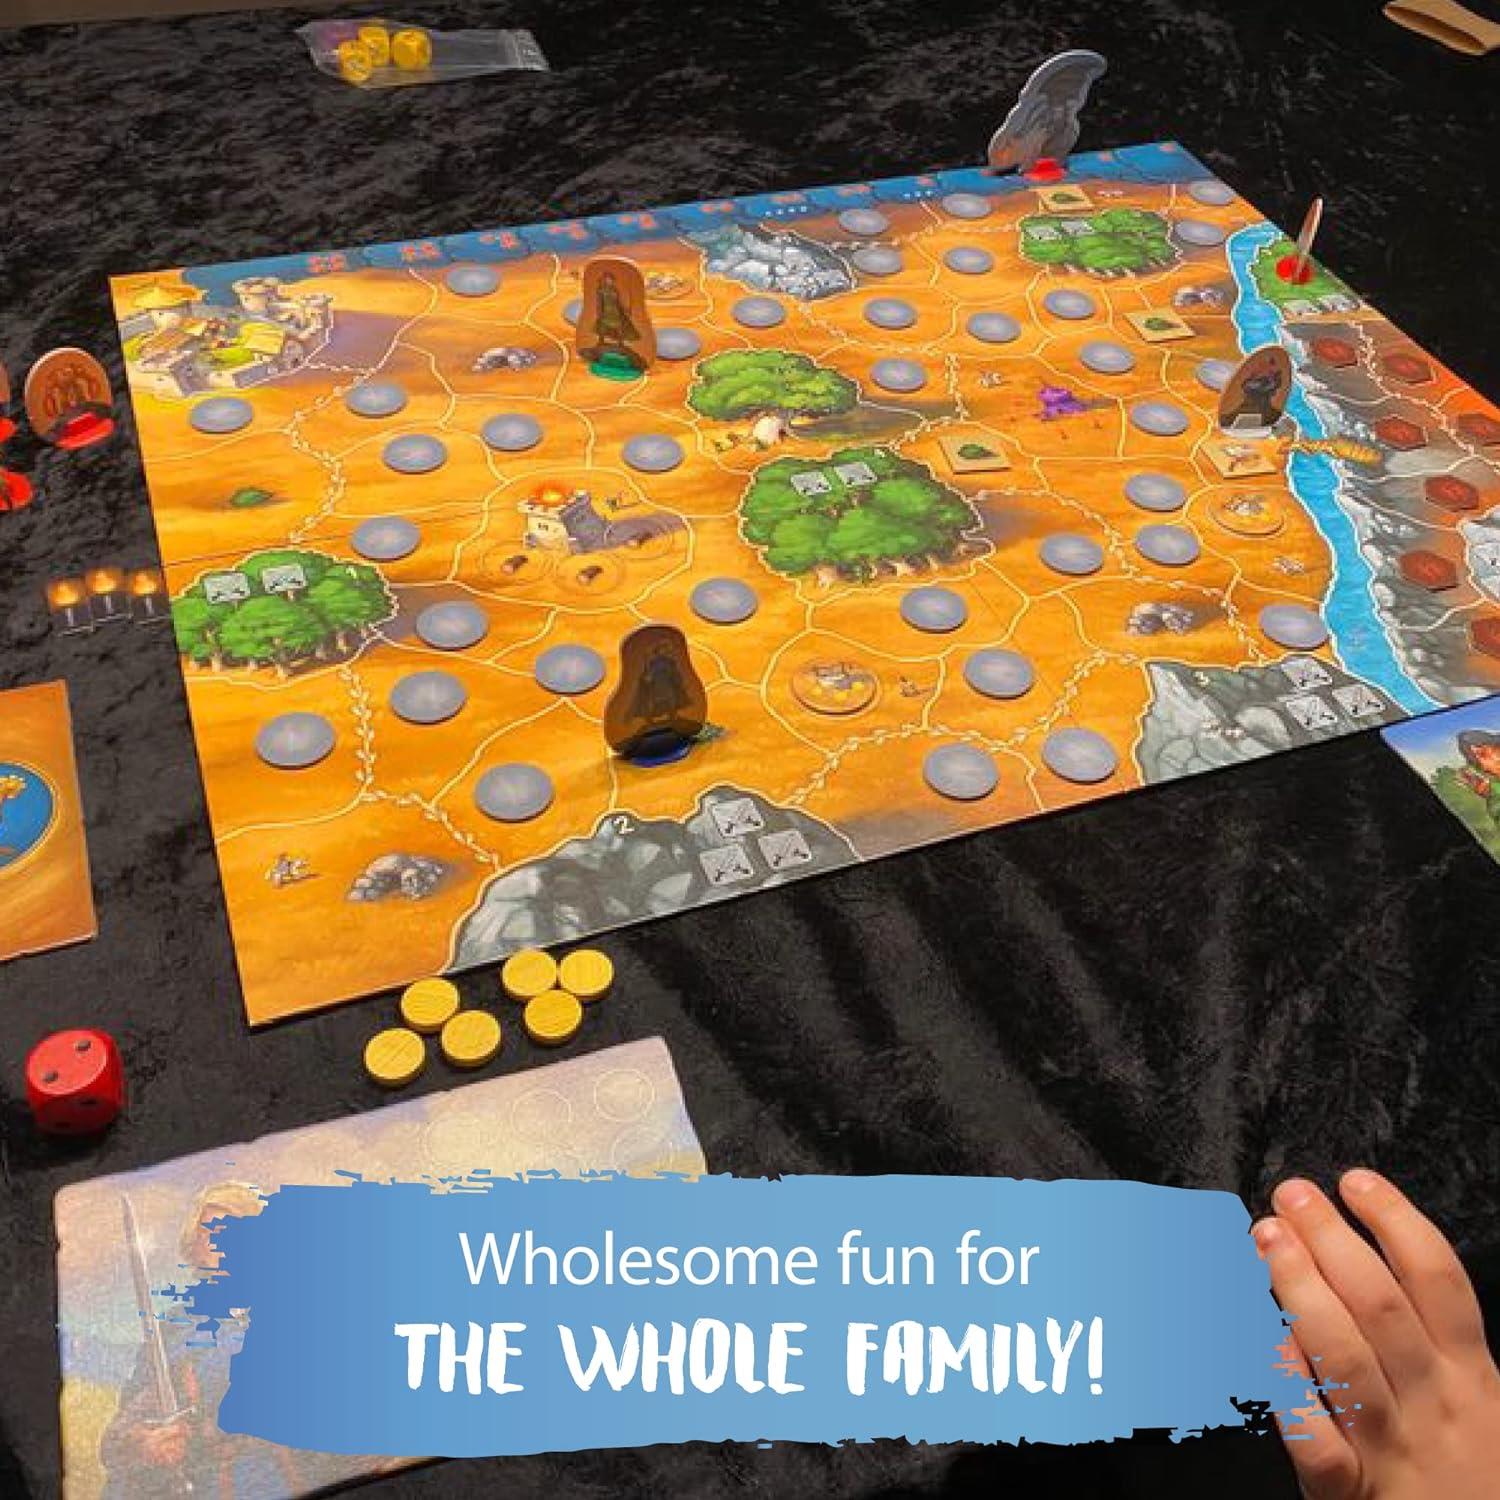 Andor: The Family Fantasy Board Game